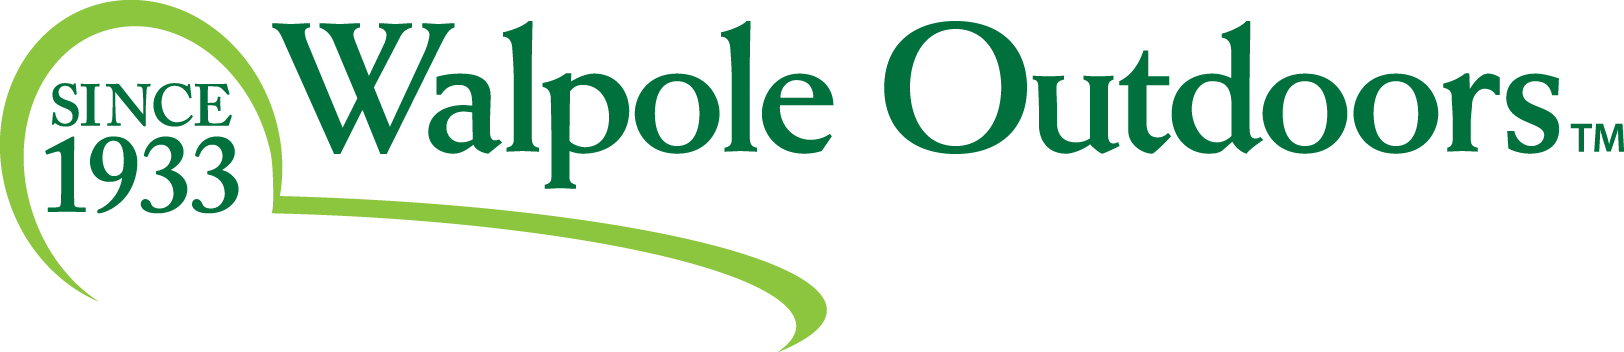 Walpole Outdoors Logo (1624x352)